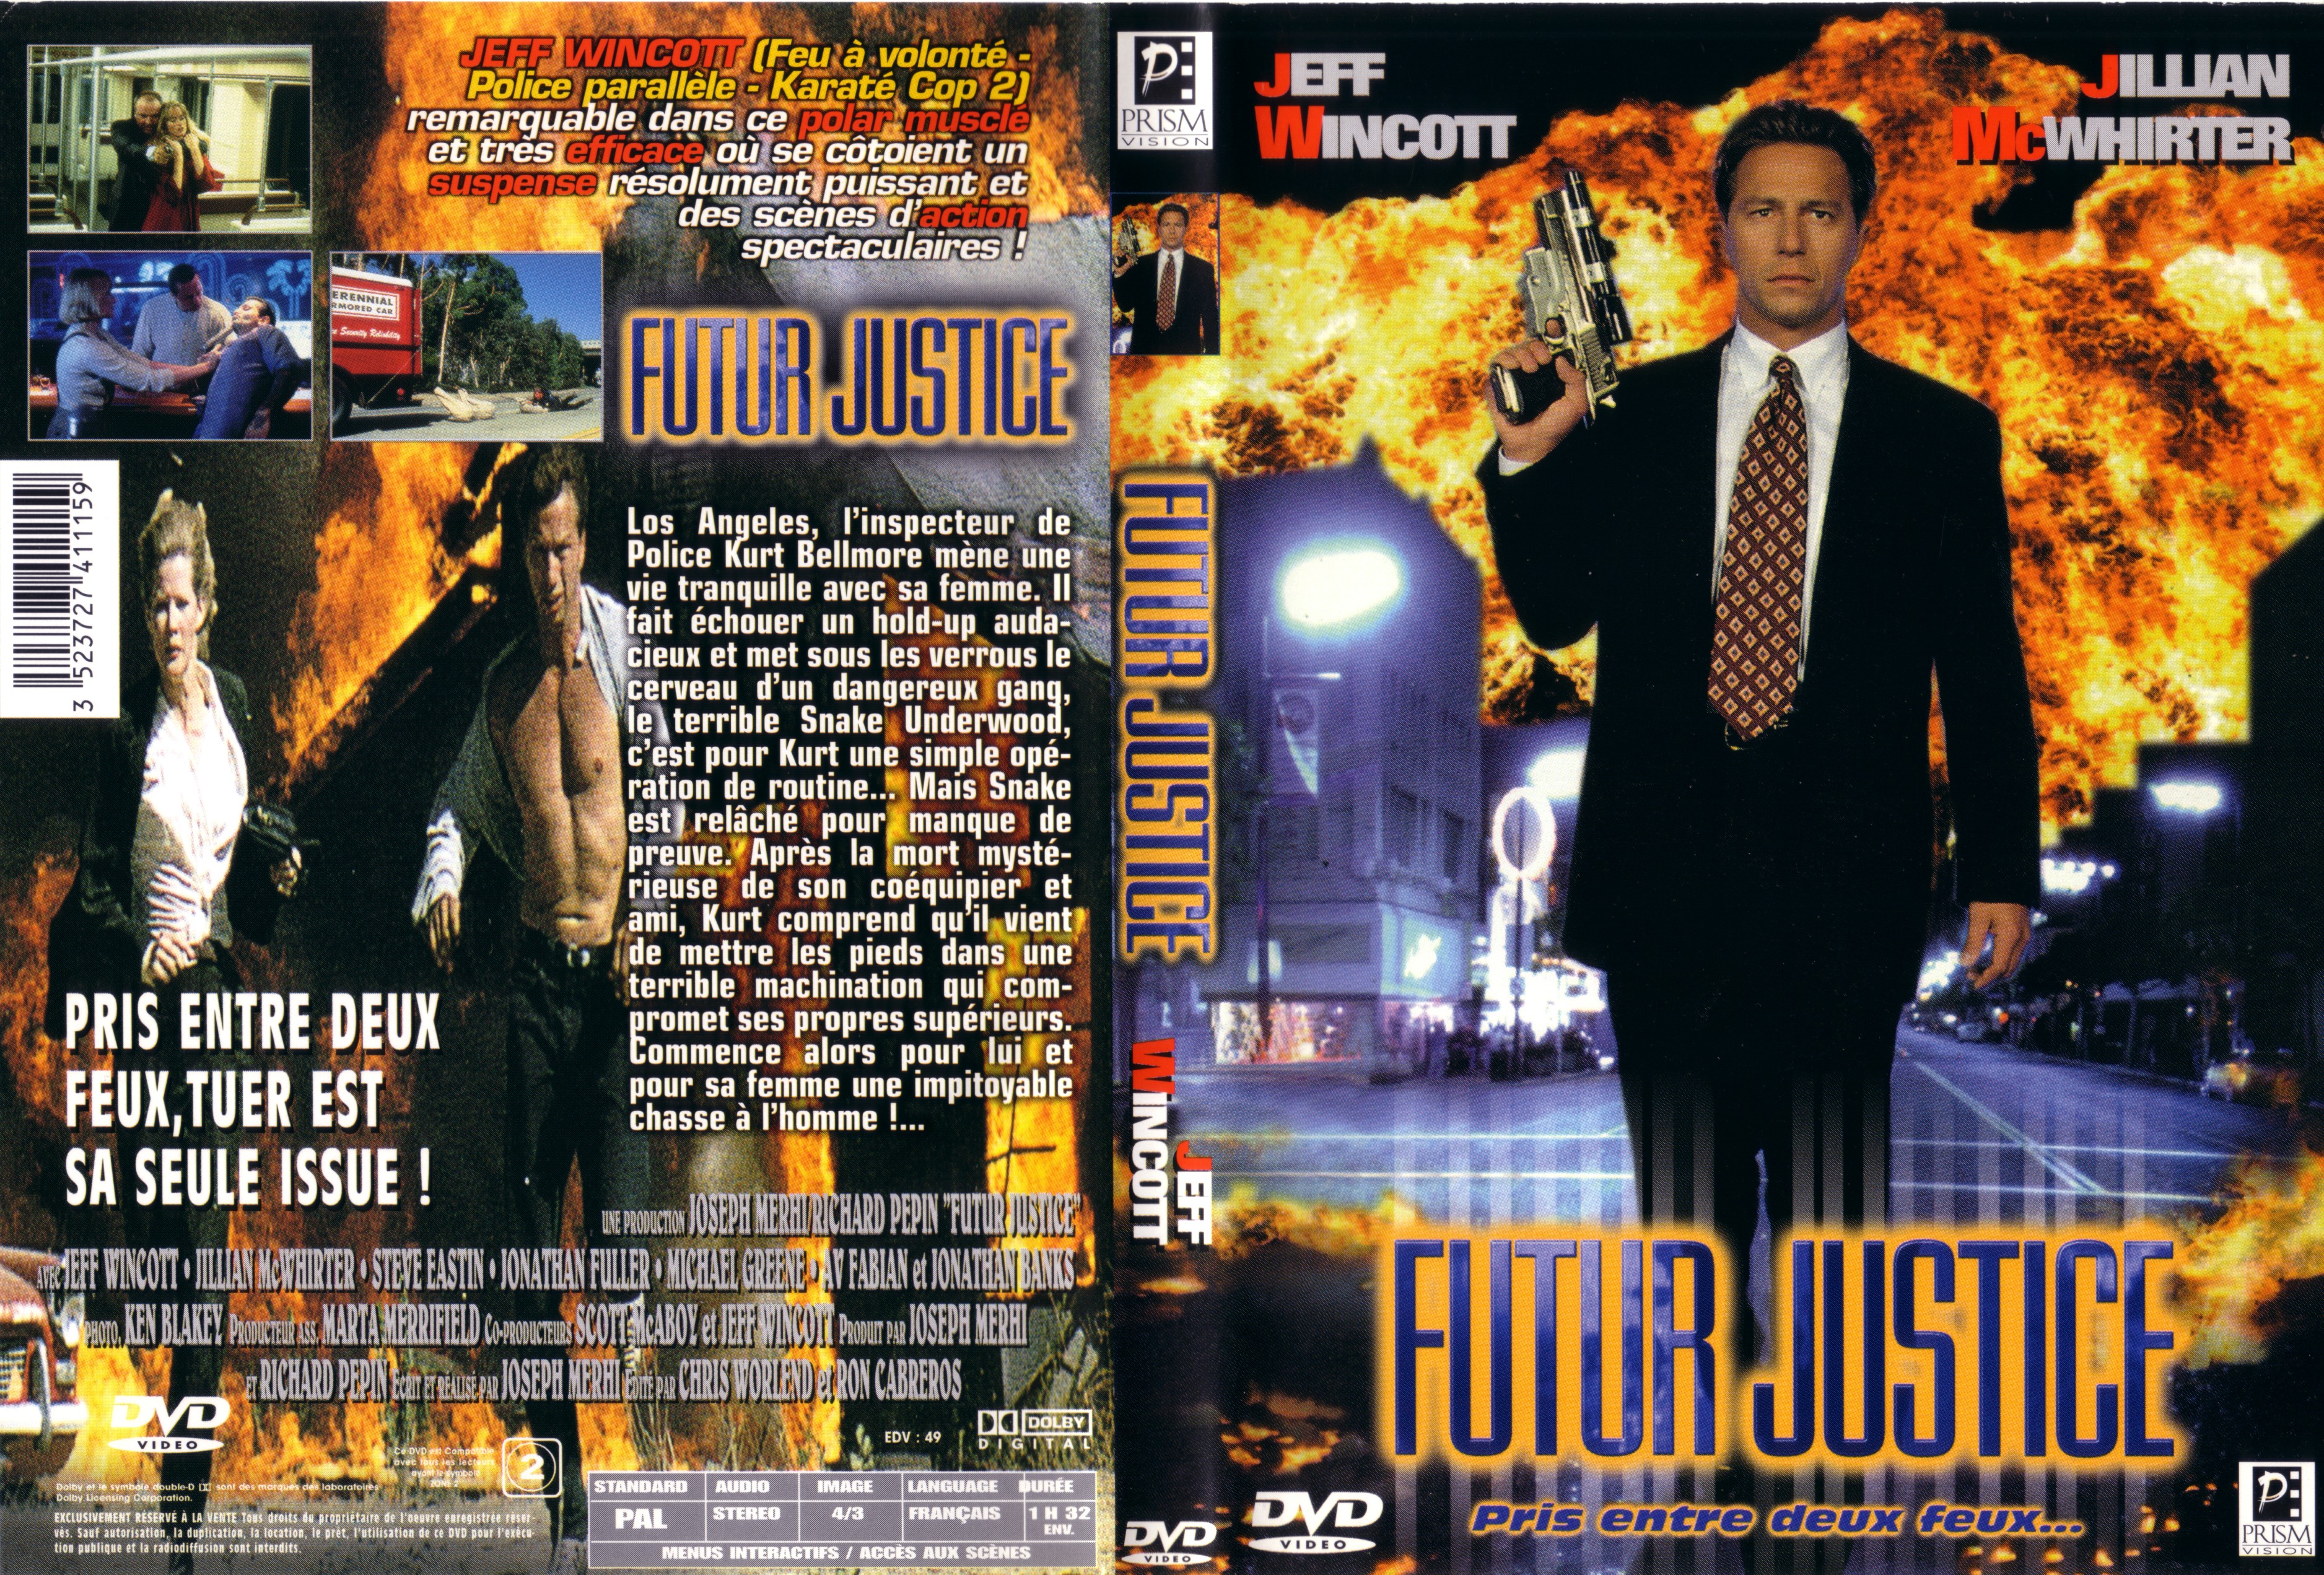 Jaquette DVD Futur justice v2